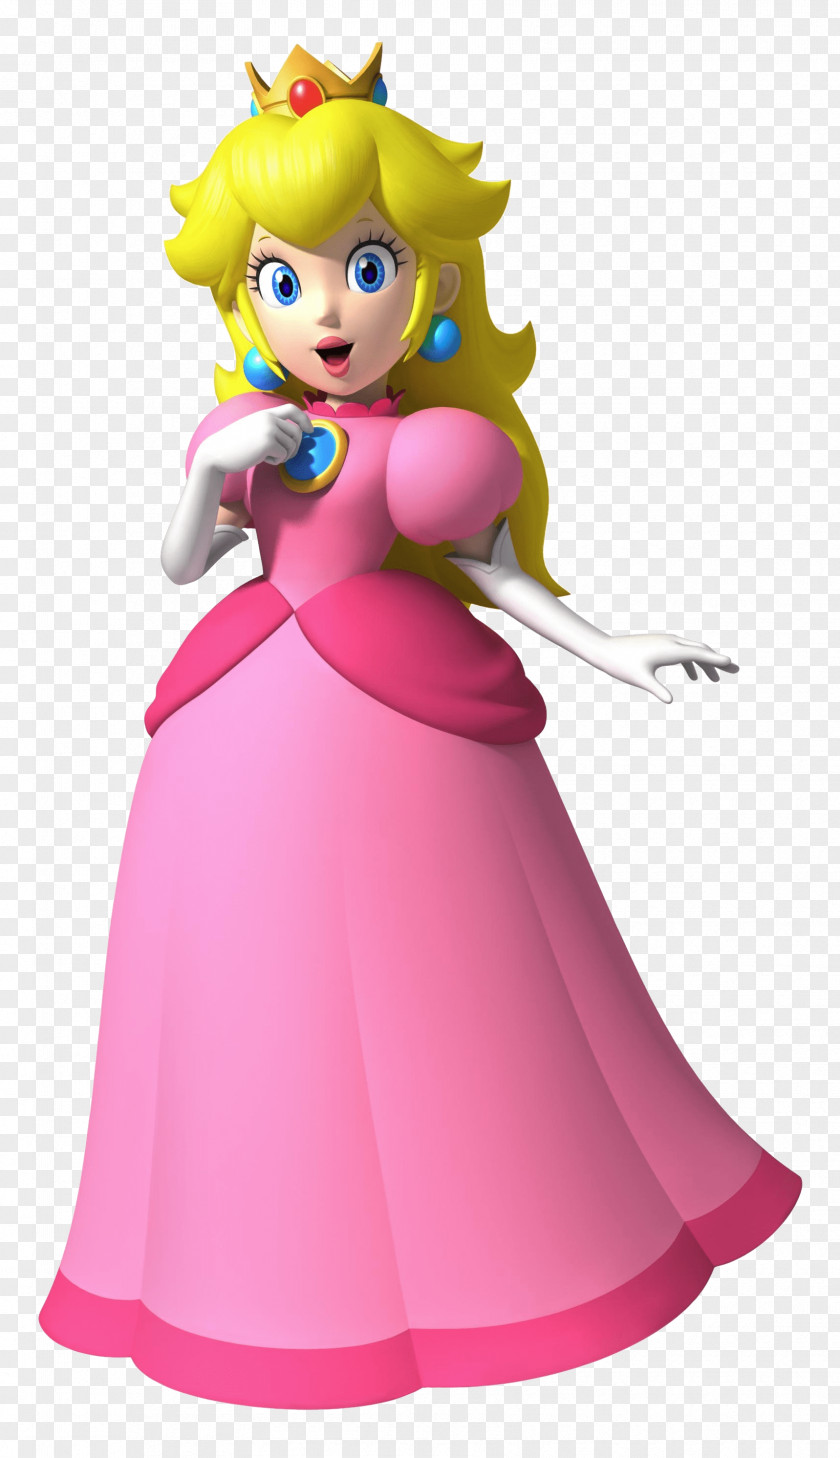 Peach Princess New Super Mario Bros. Wii Daisy Bowser PNG